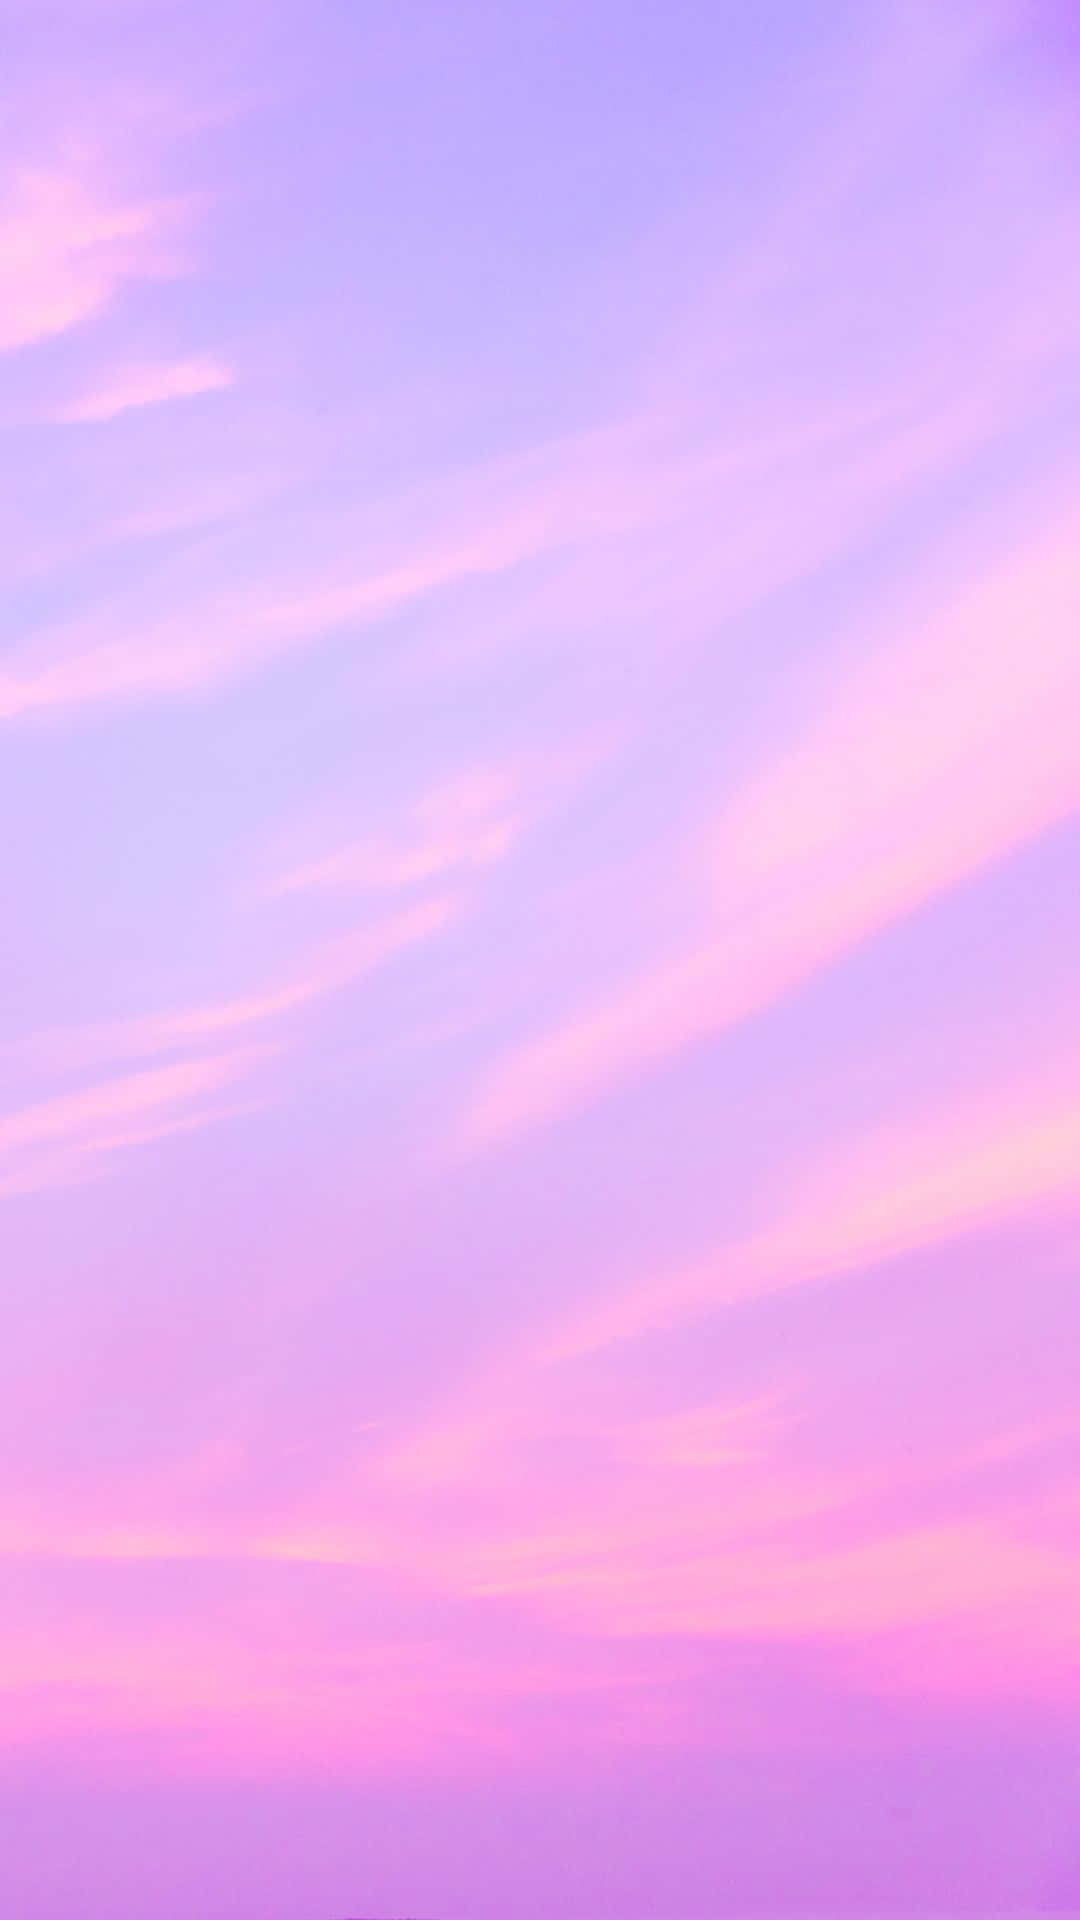 Top 10 Best Pastel Purple iPhone Wallpapers [ HQ ]